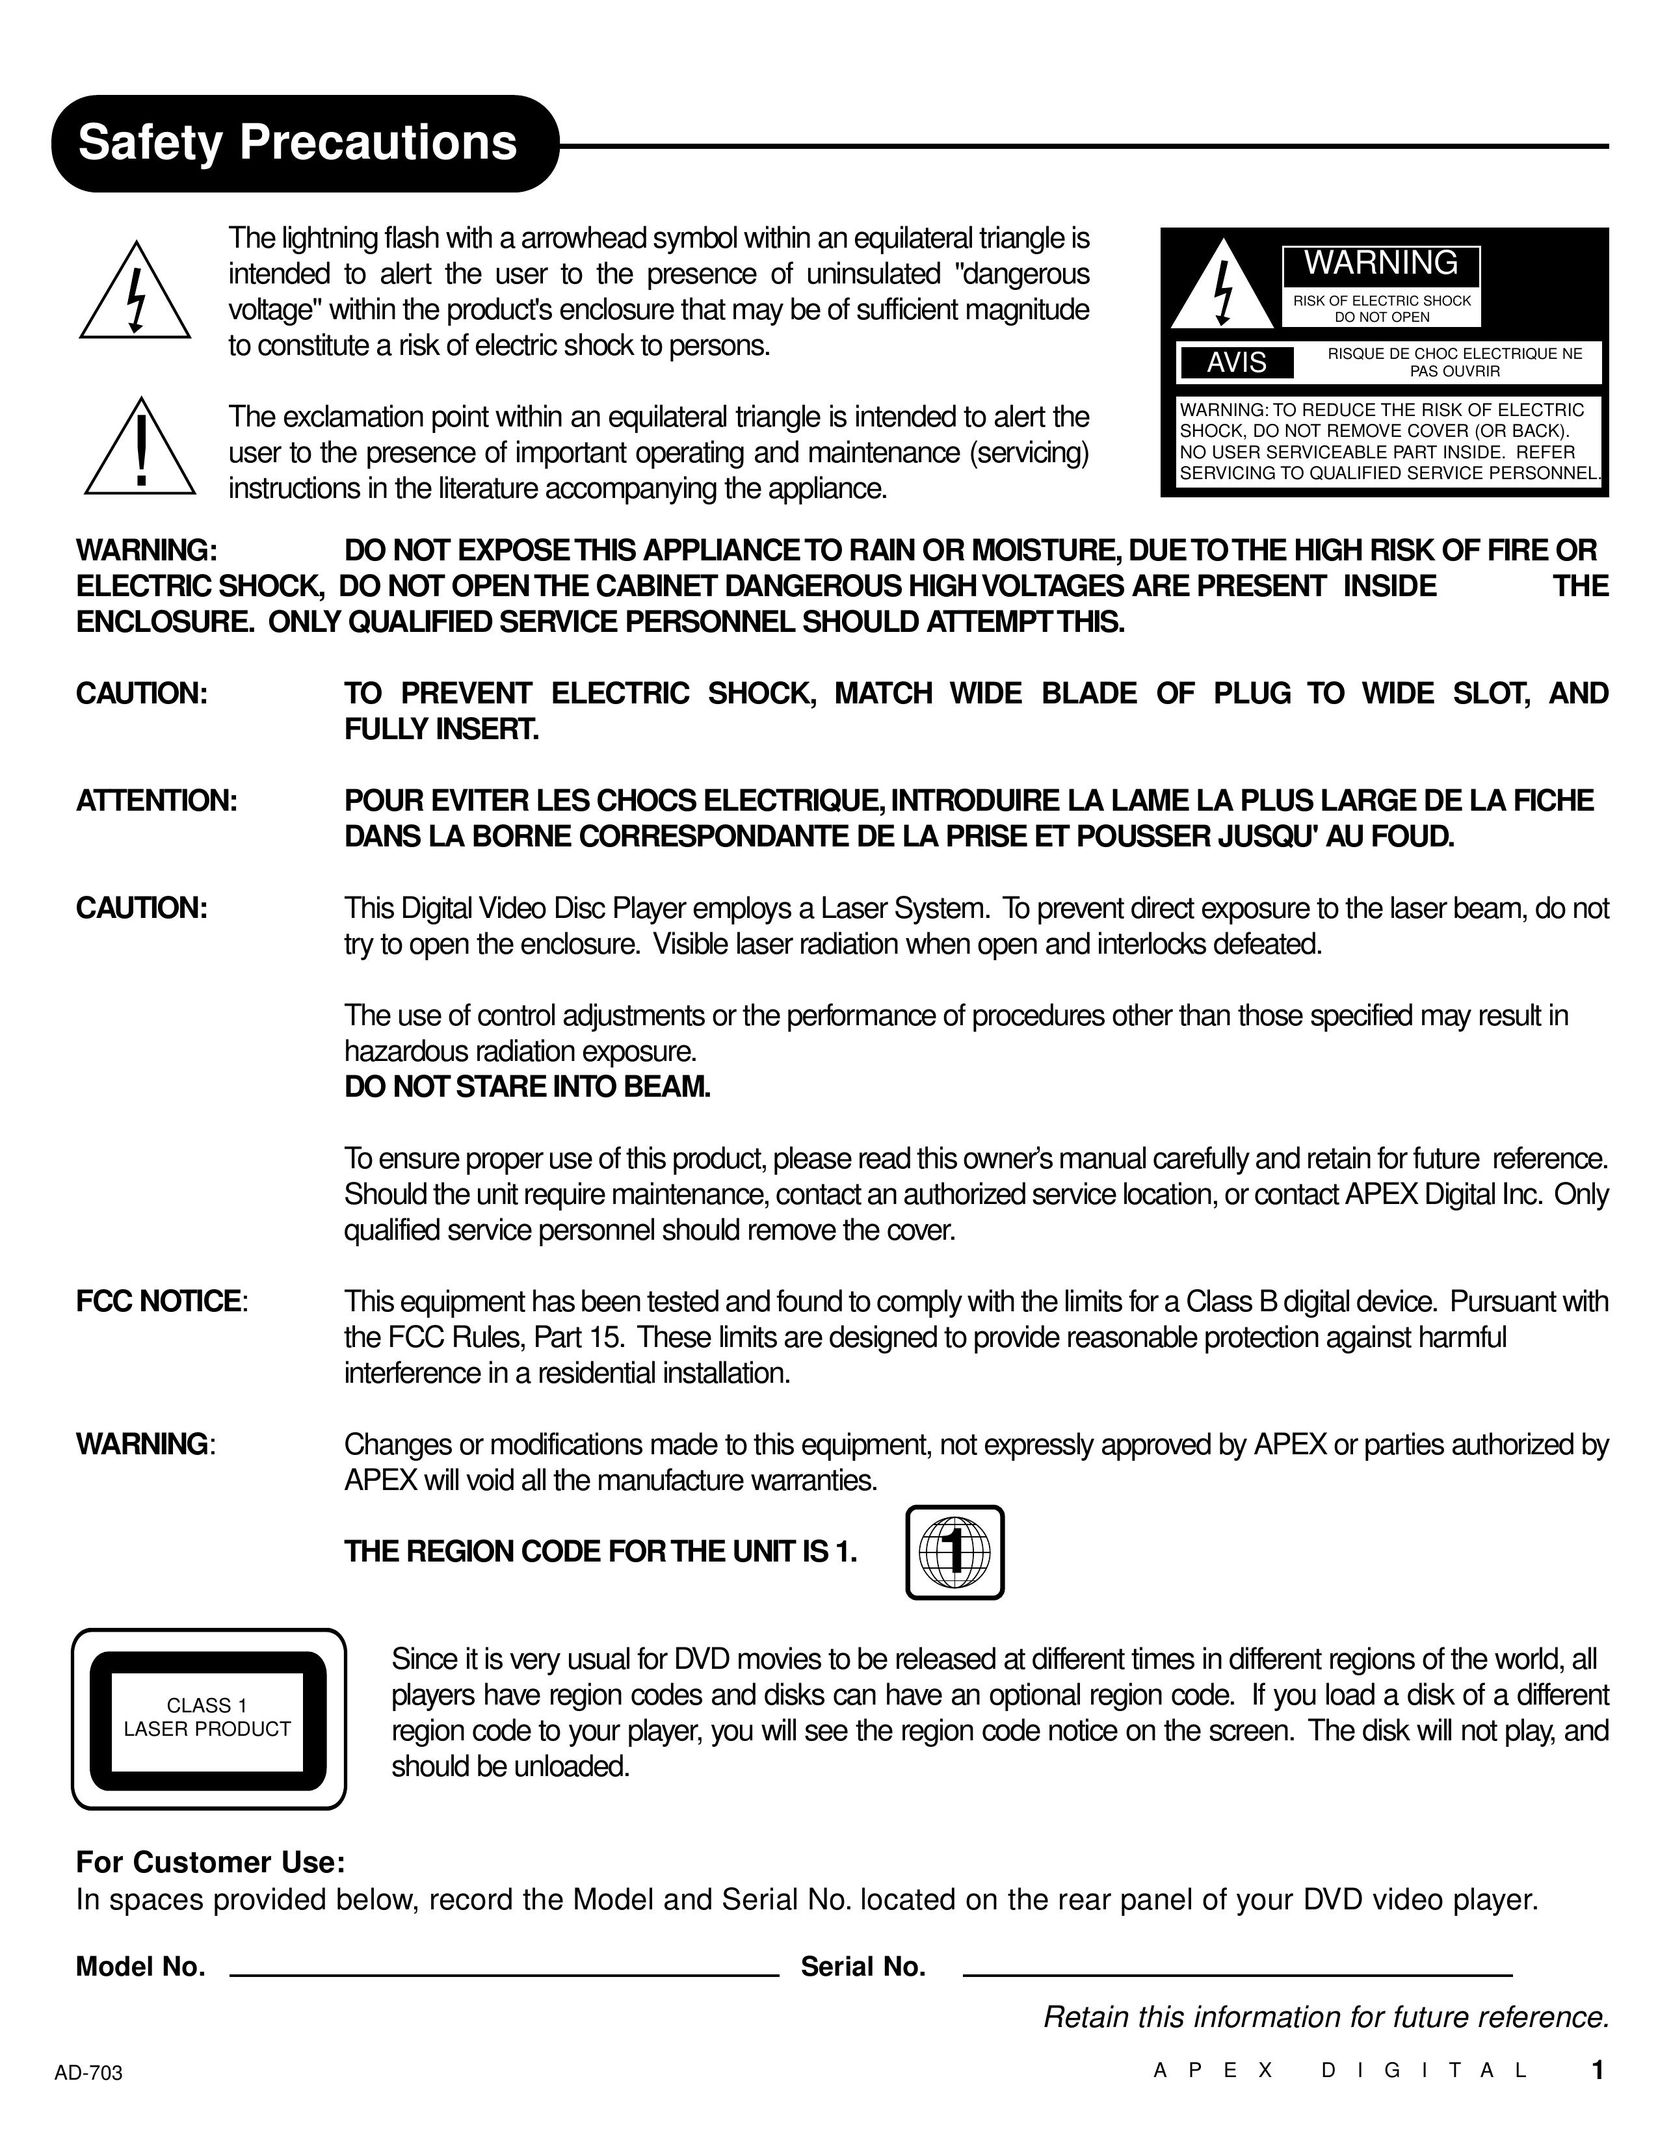 Apex Digital LAD-703 Portable DVD Player User Manual